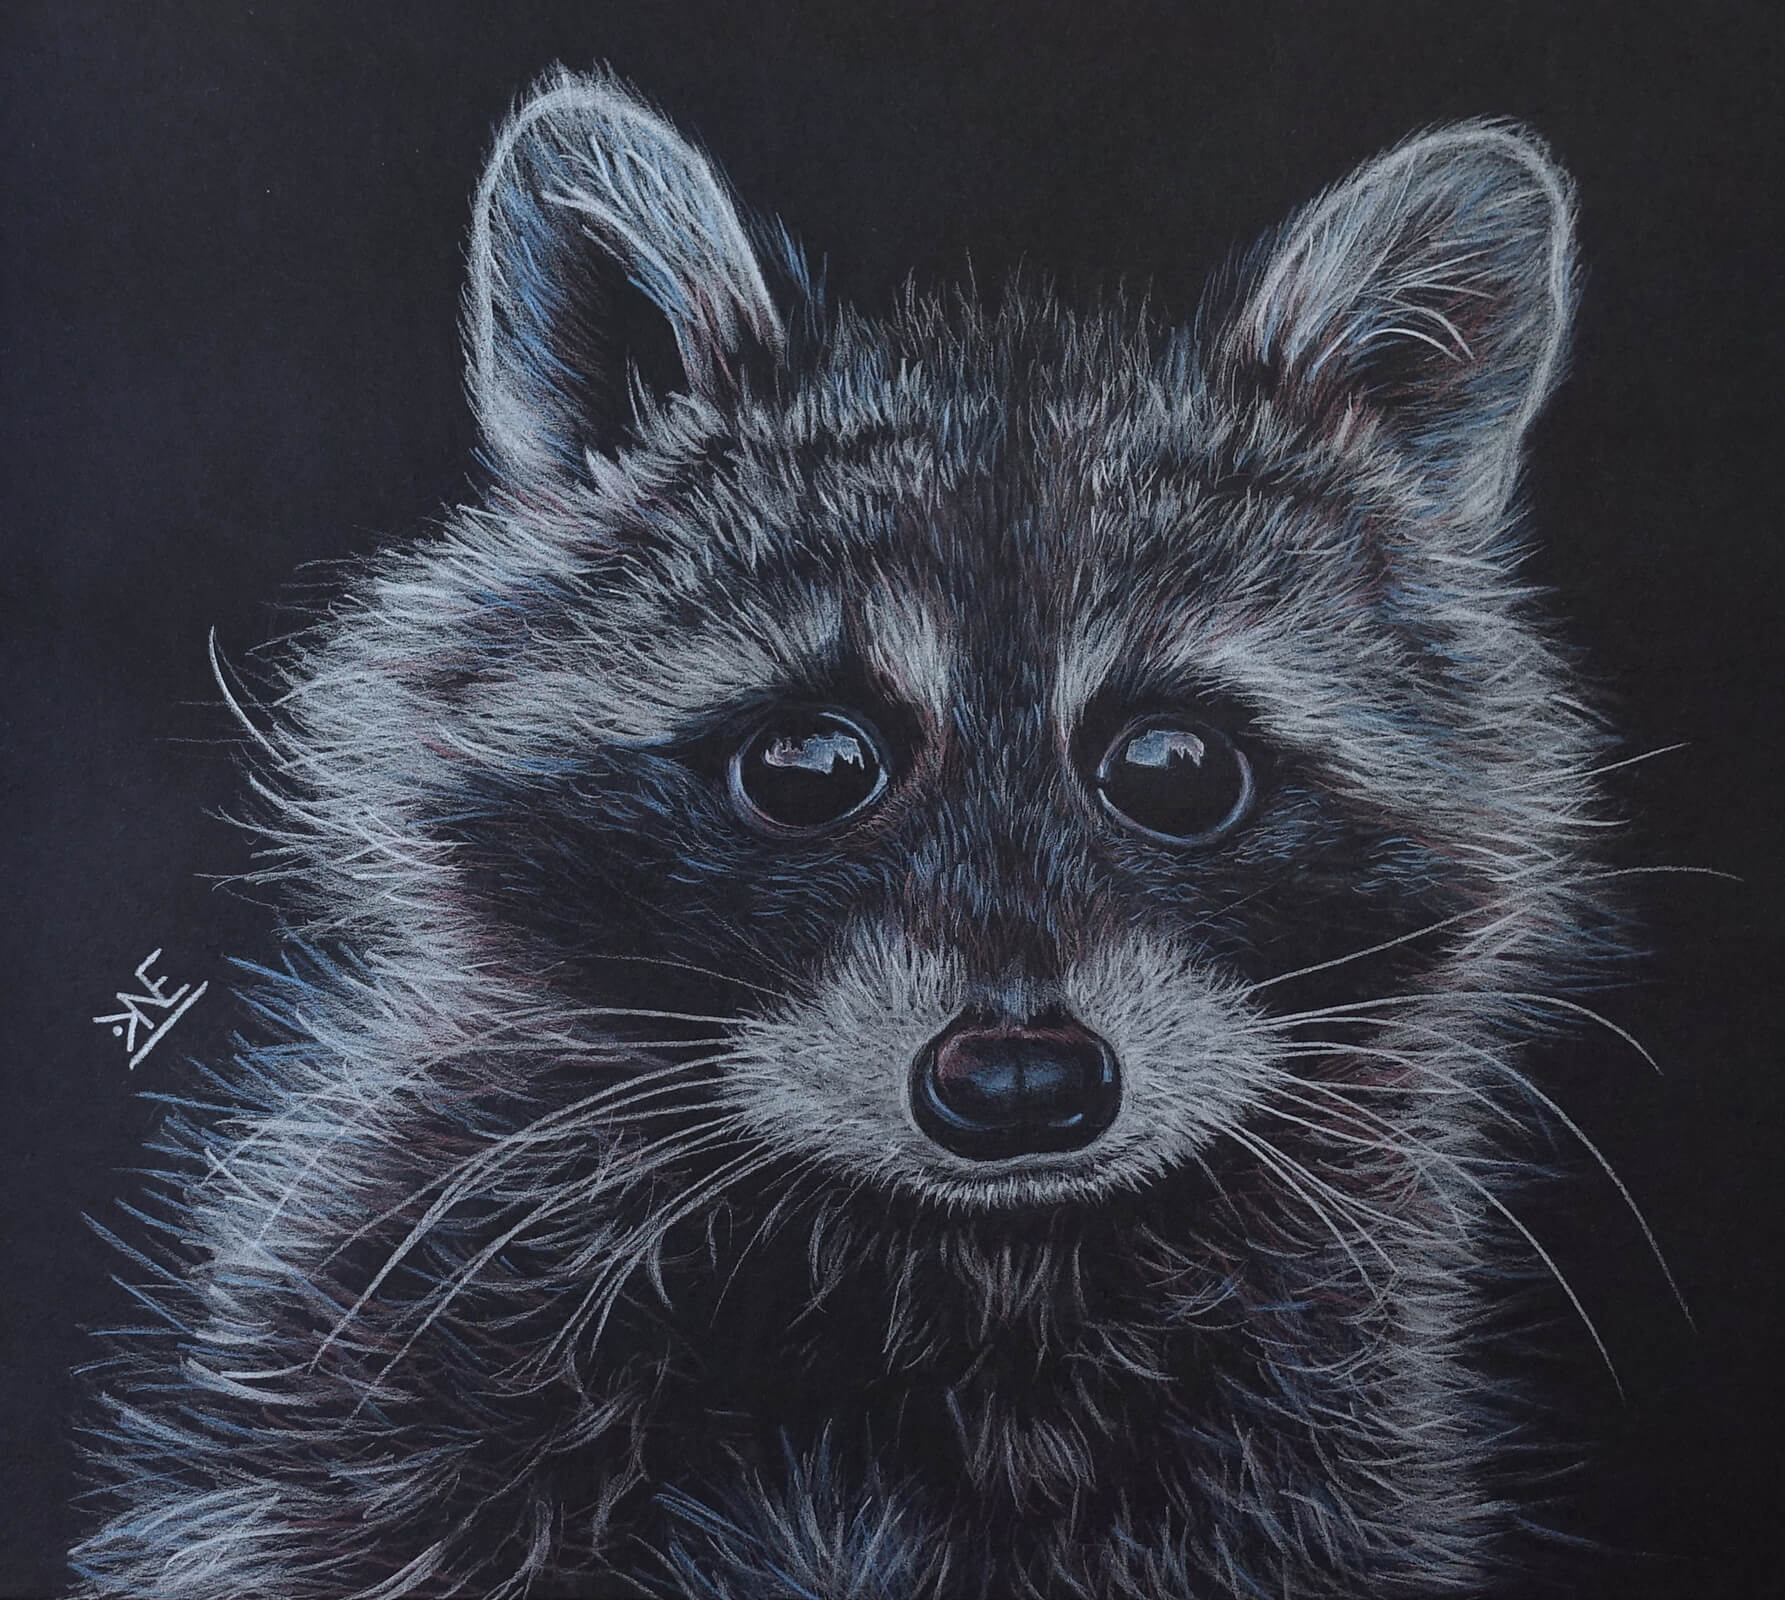 Raccoon metallic pencil drawing